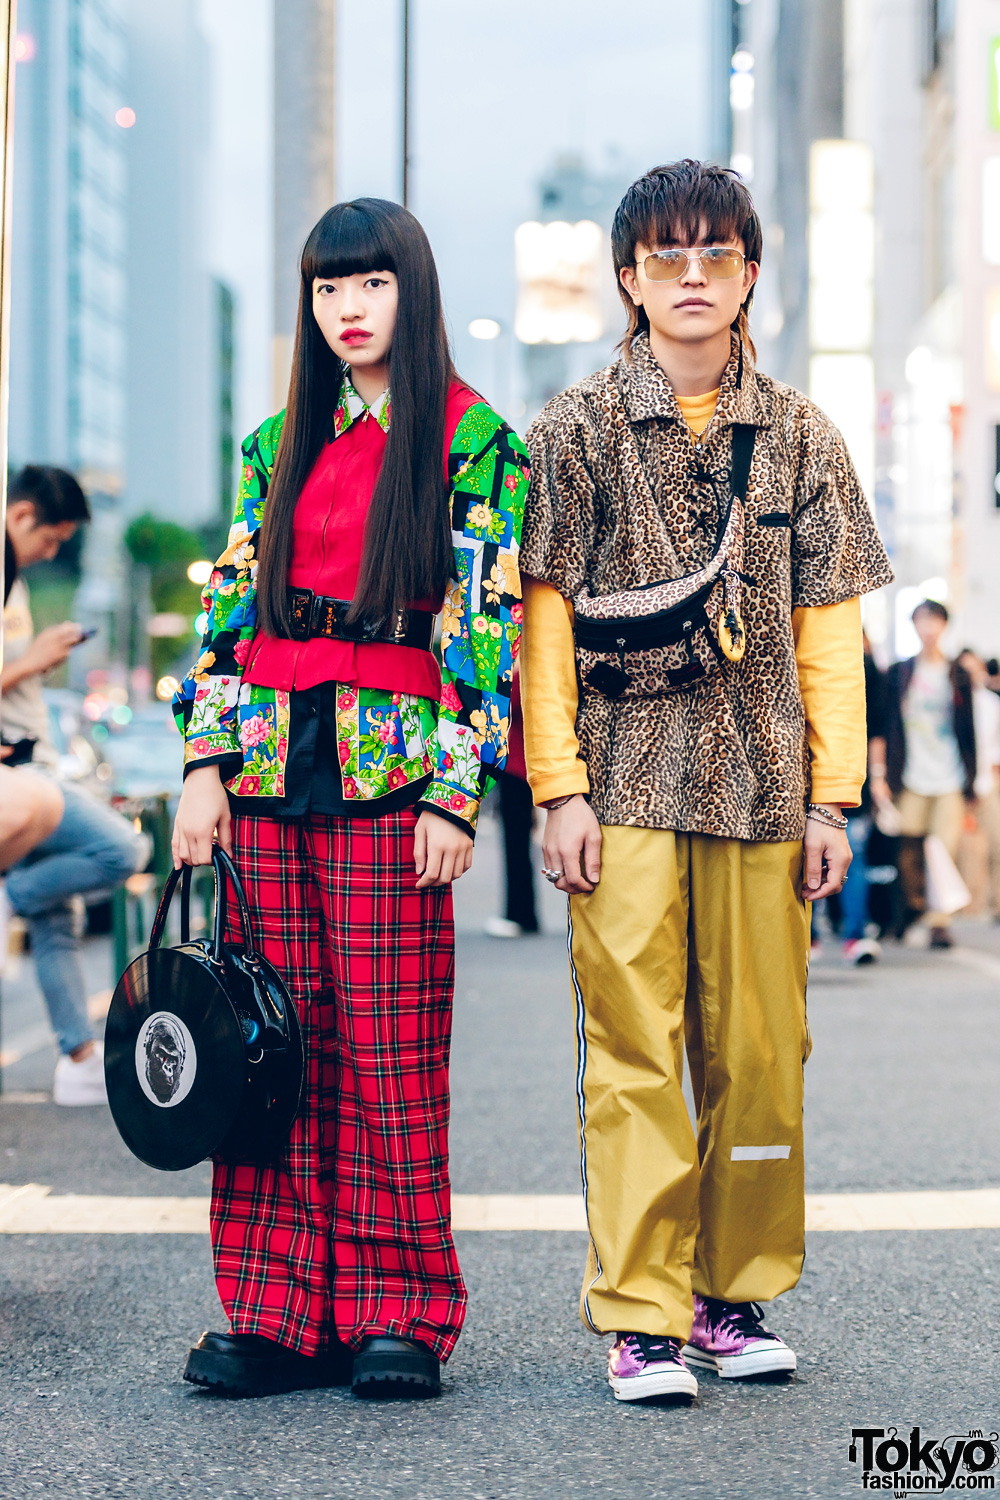 Японский молодежный. Хараджуку Токио стиль. Уличная мода 80-е Харадзюку Япония. Япония стрит стайл. Япония Харадзюку 90е.